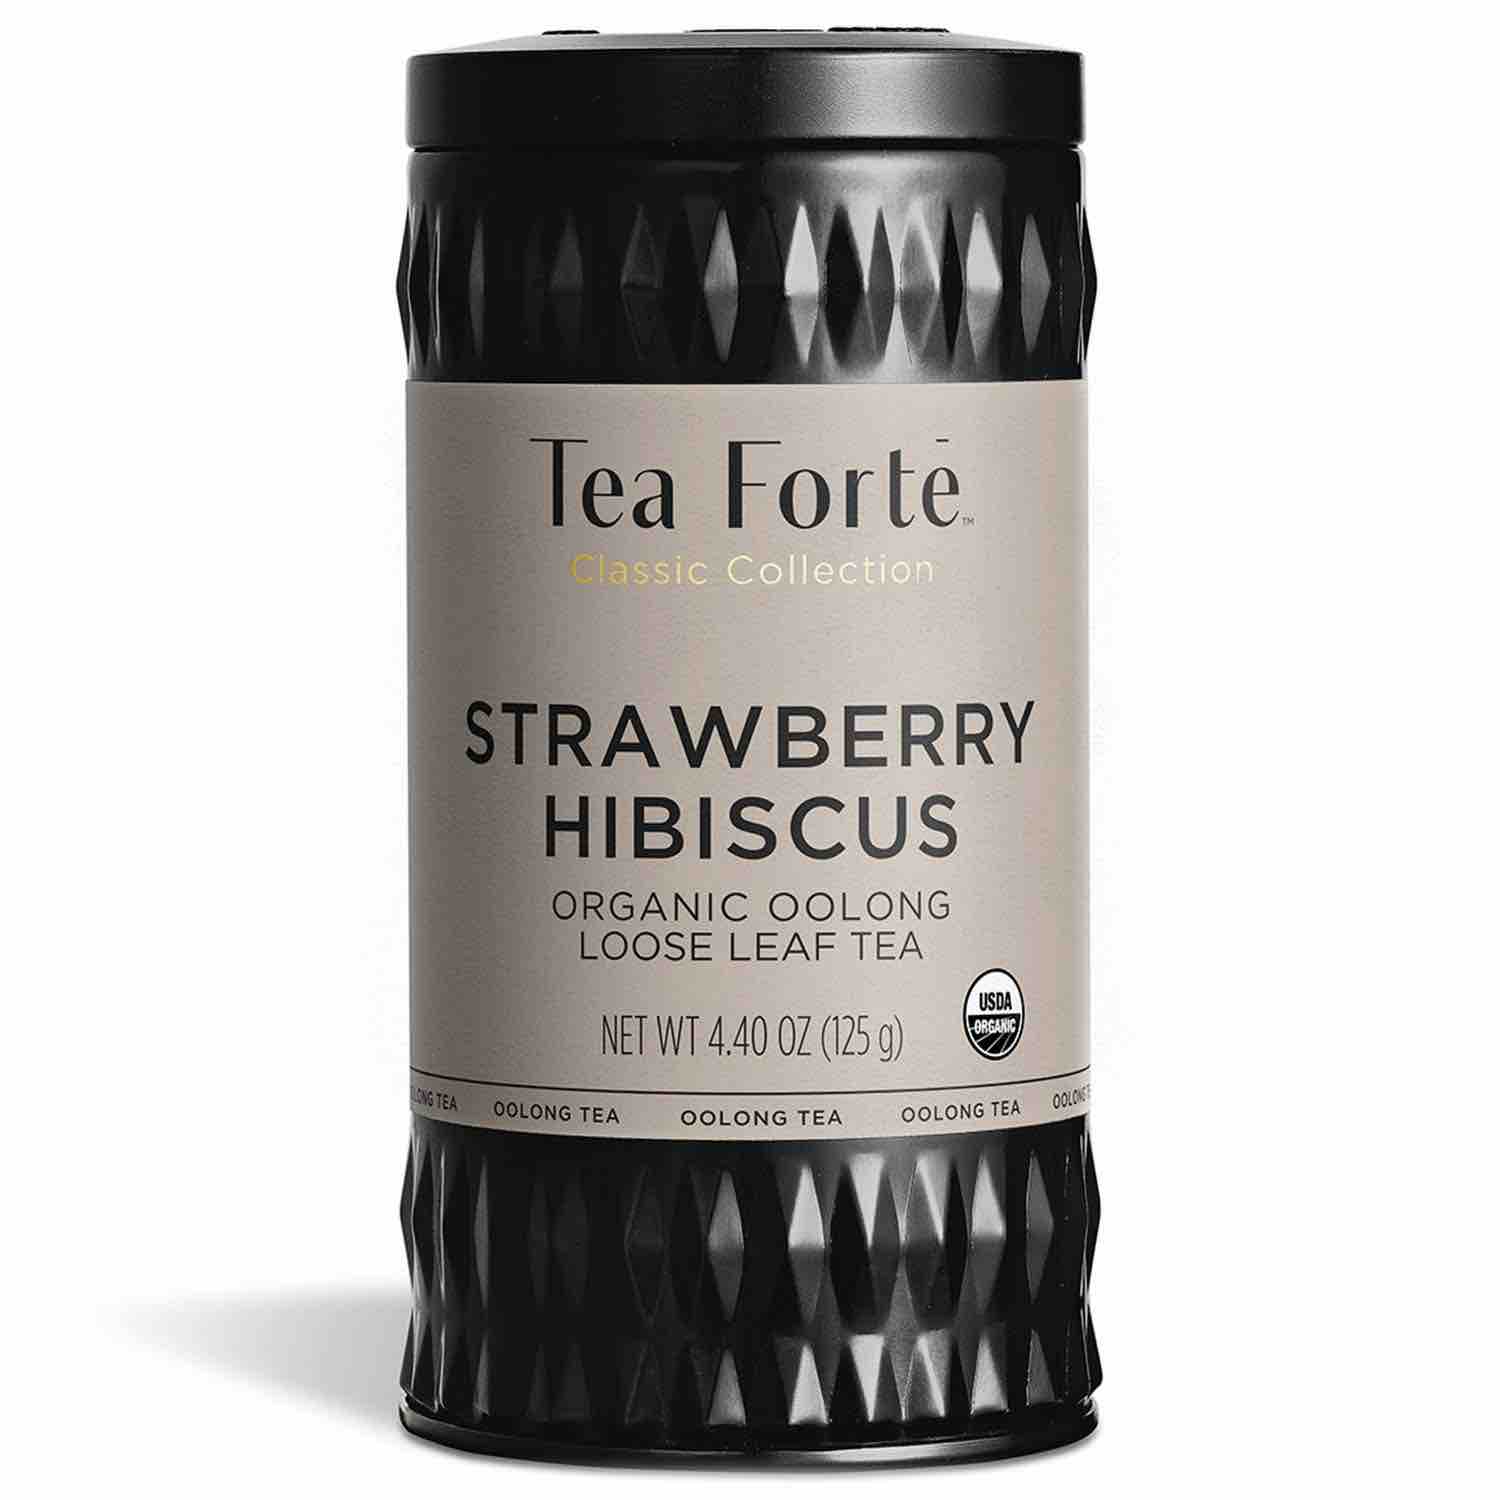 Tea Forte Black Tea Canister | Strawberry Hibiscus